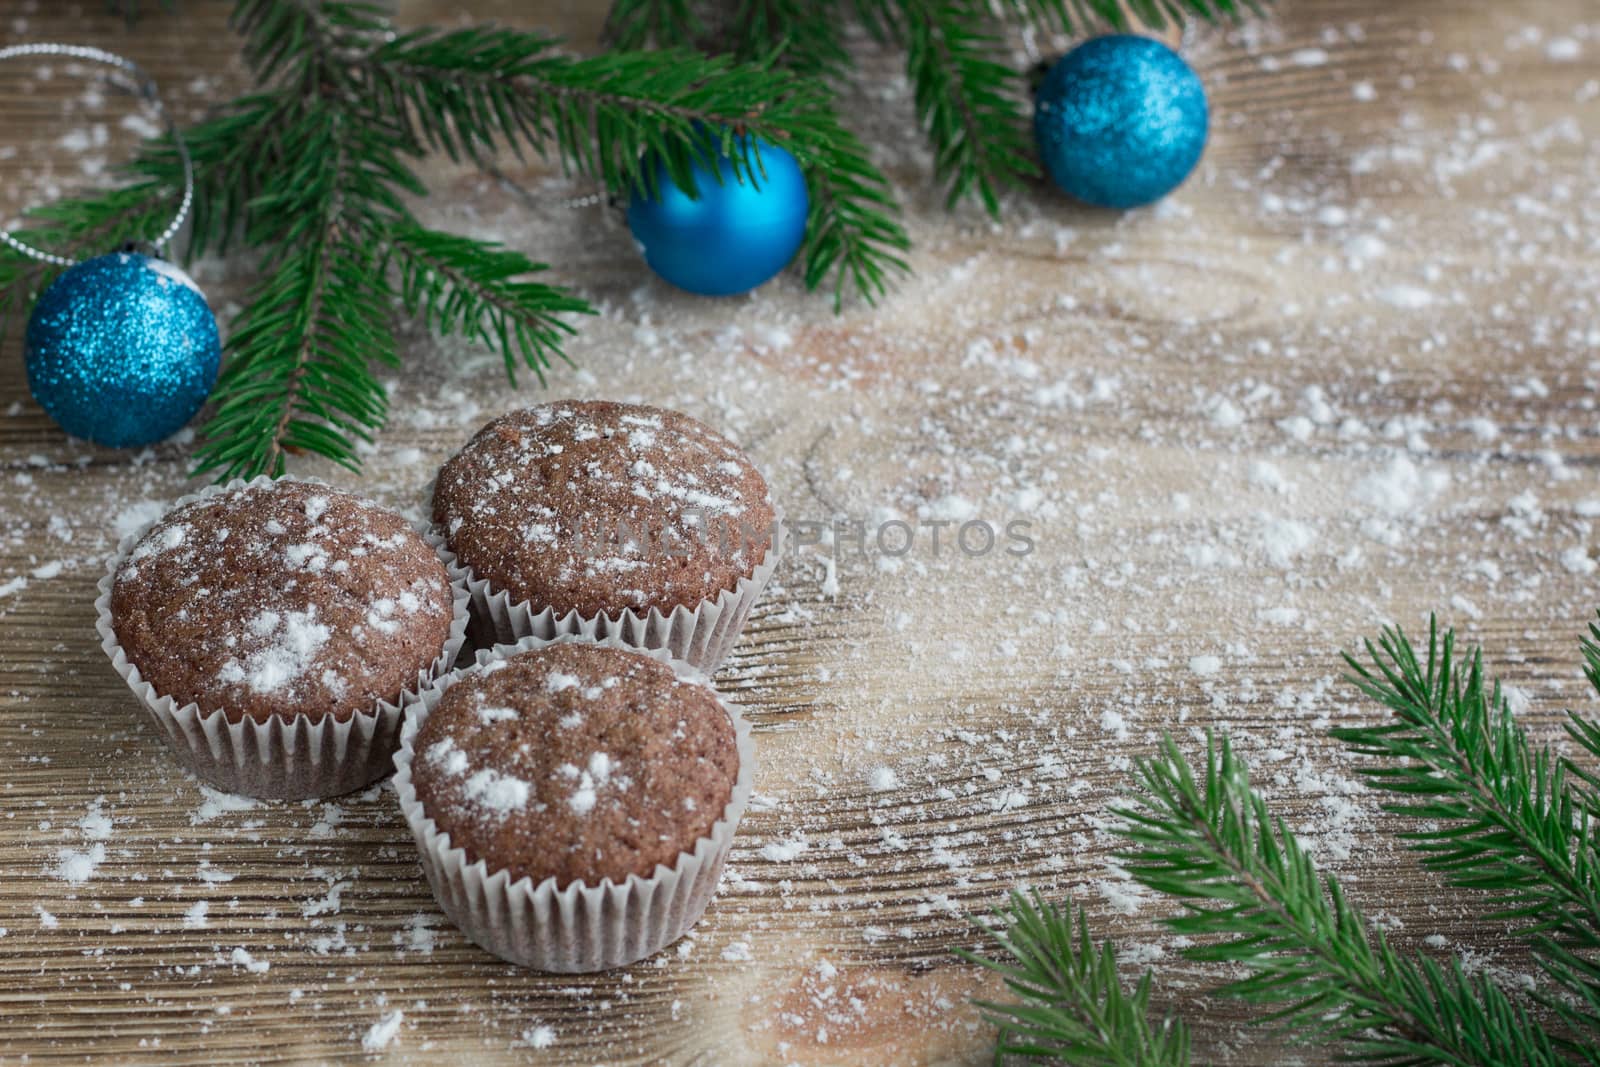 Three Christmas cakes, winter snowbound wooden background, blue  by VeraVerano